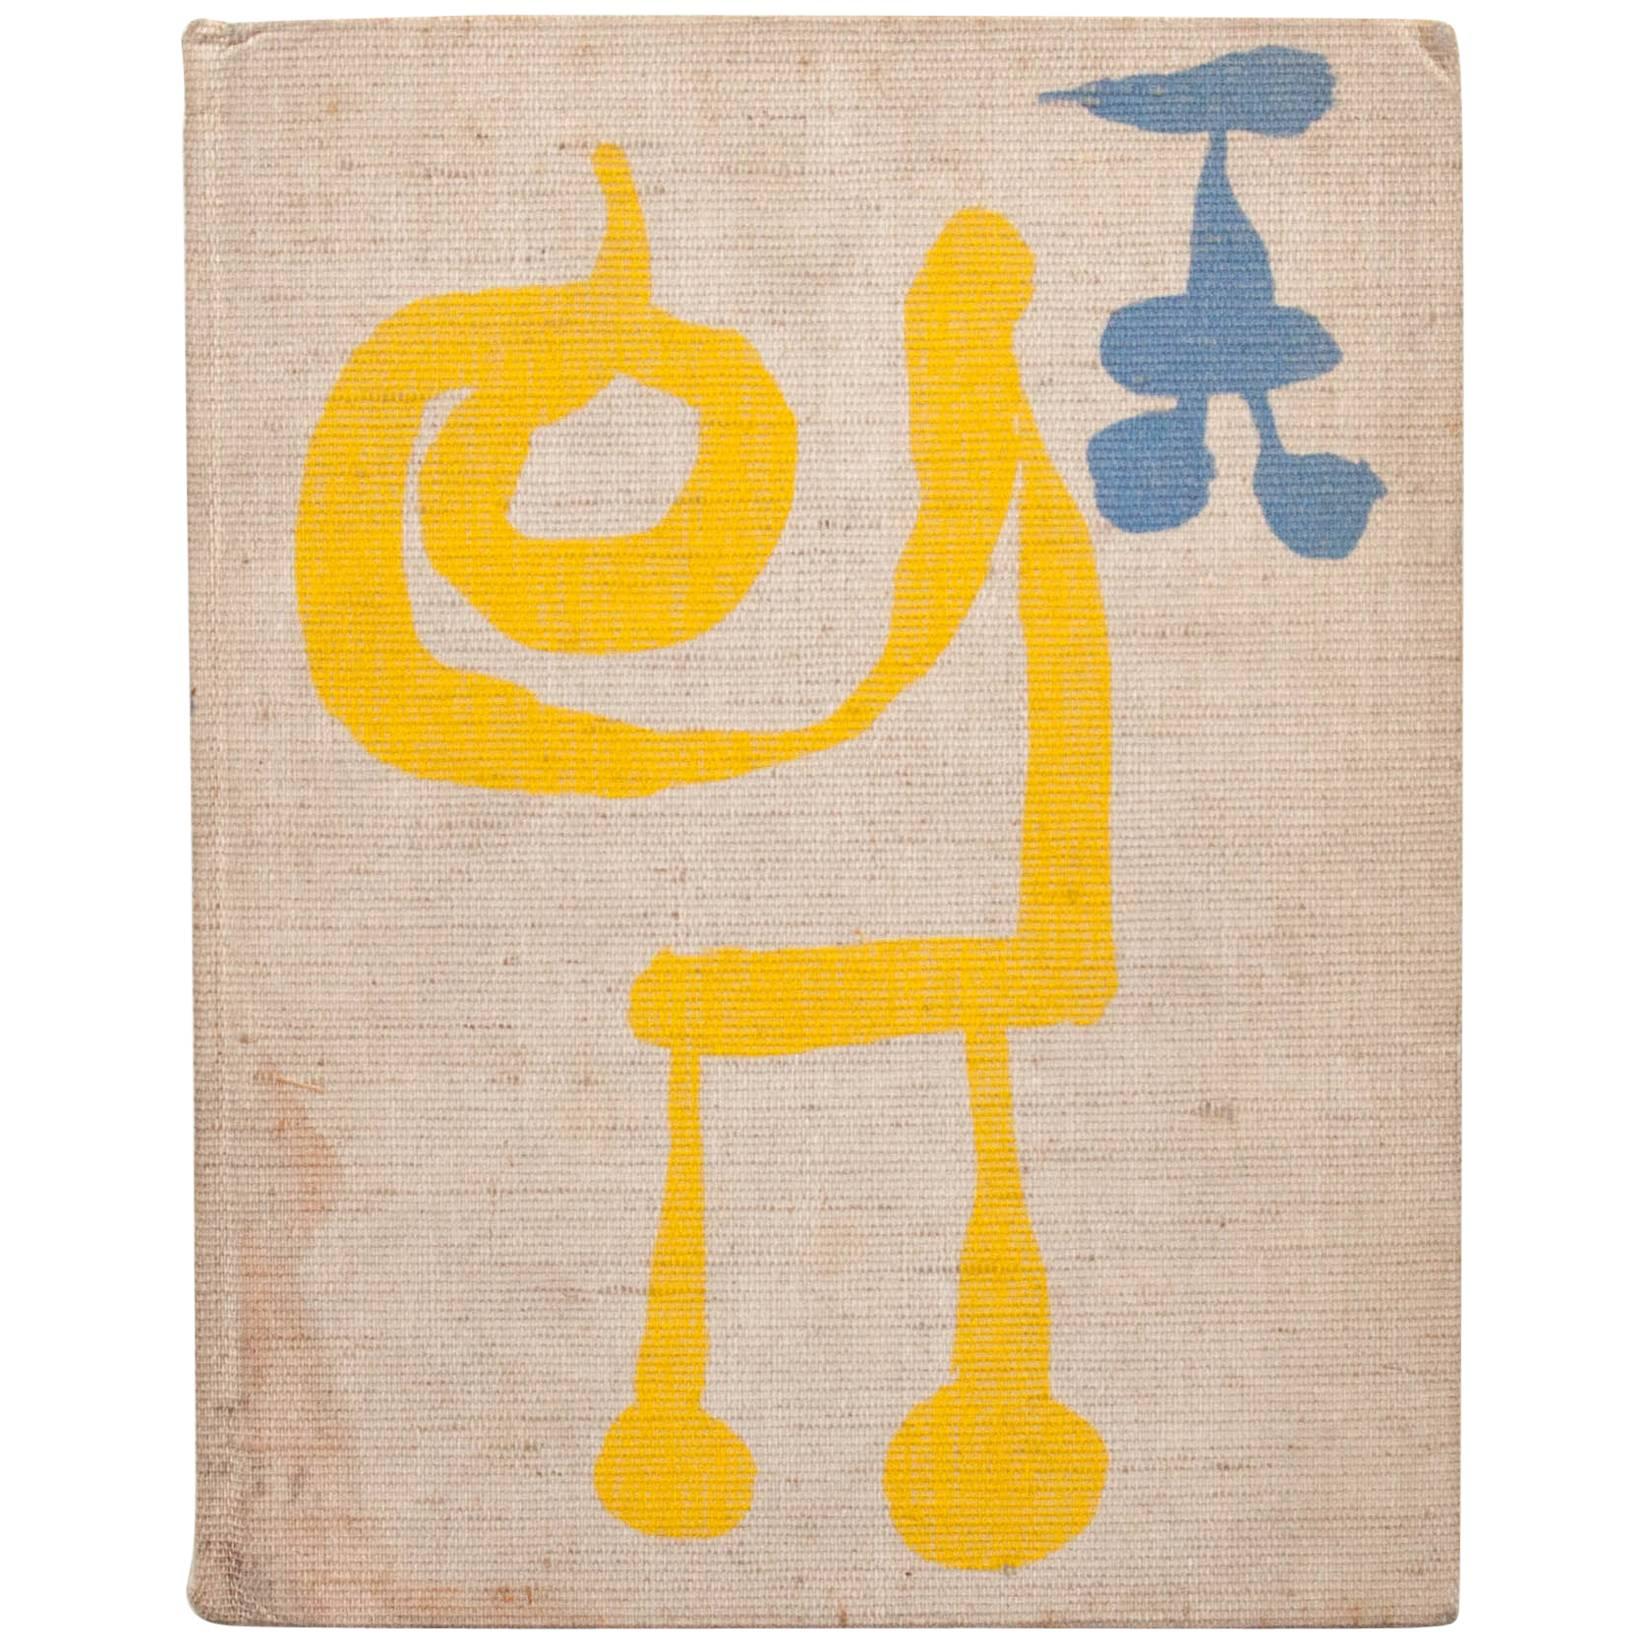 Walter Erben & Joan Miró "Joan Miró" Book, 1970